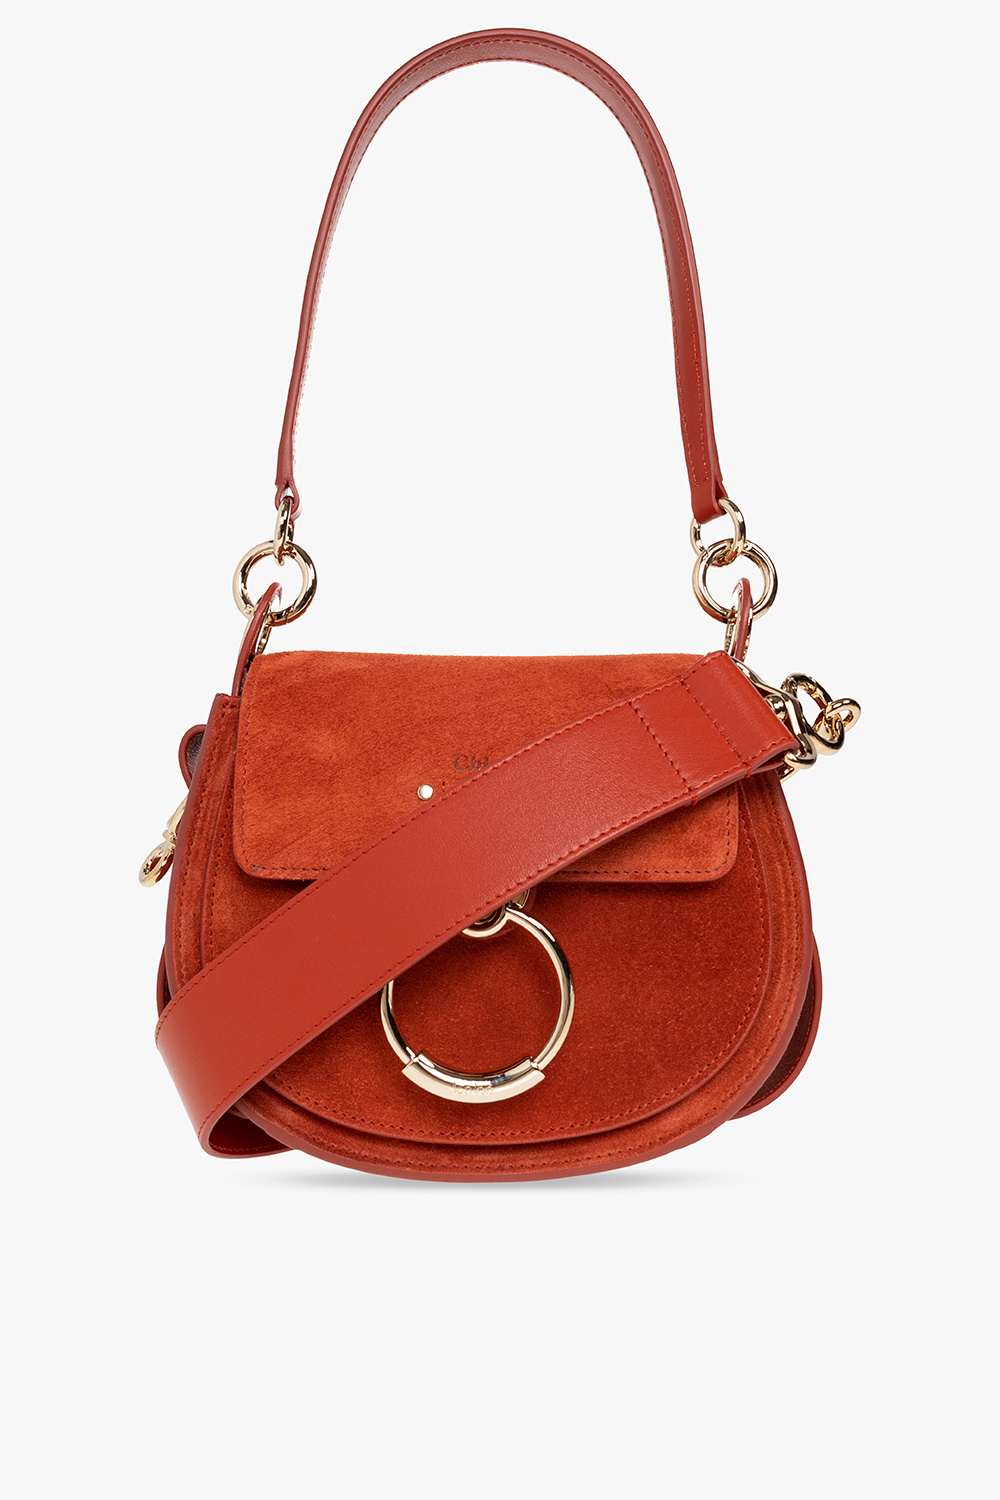 Chloé ‘Tess Small’ shoulder bag